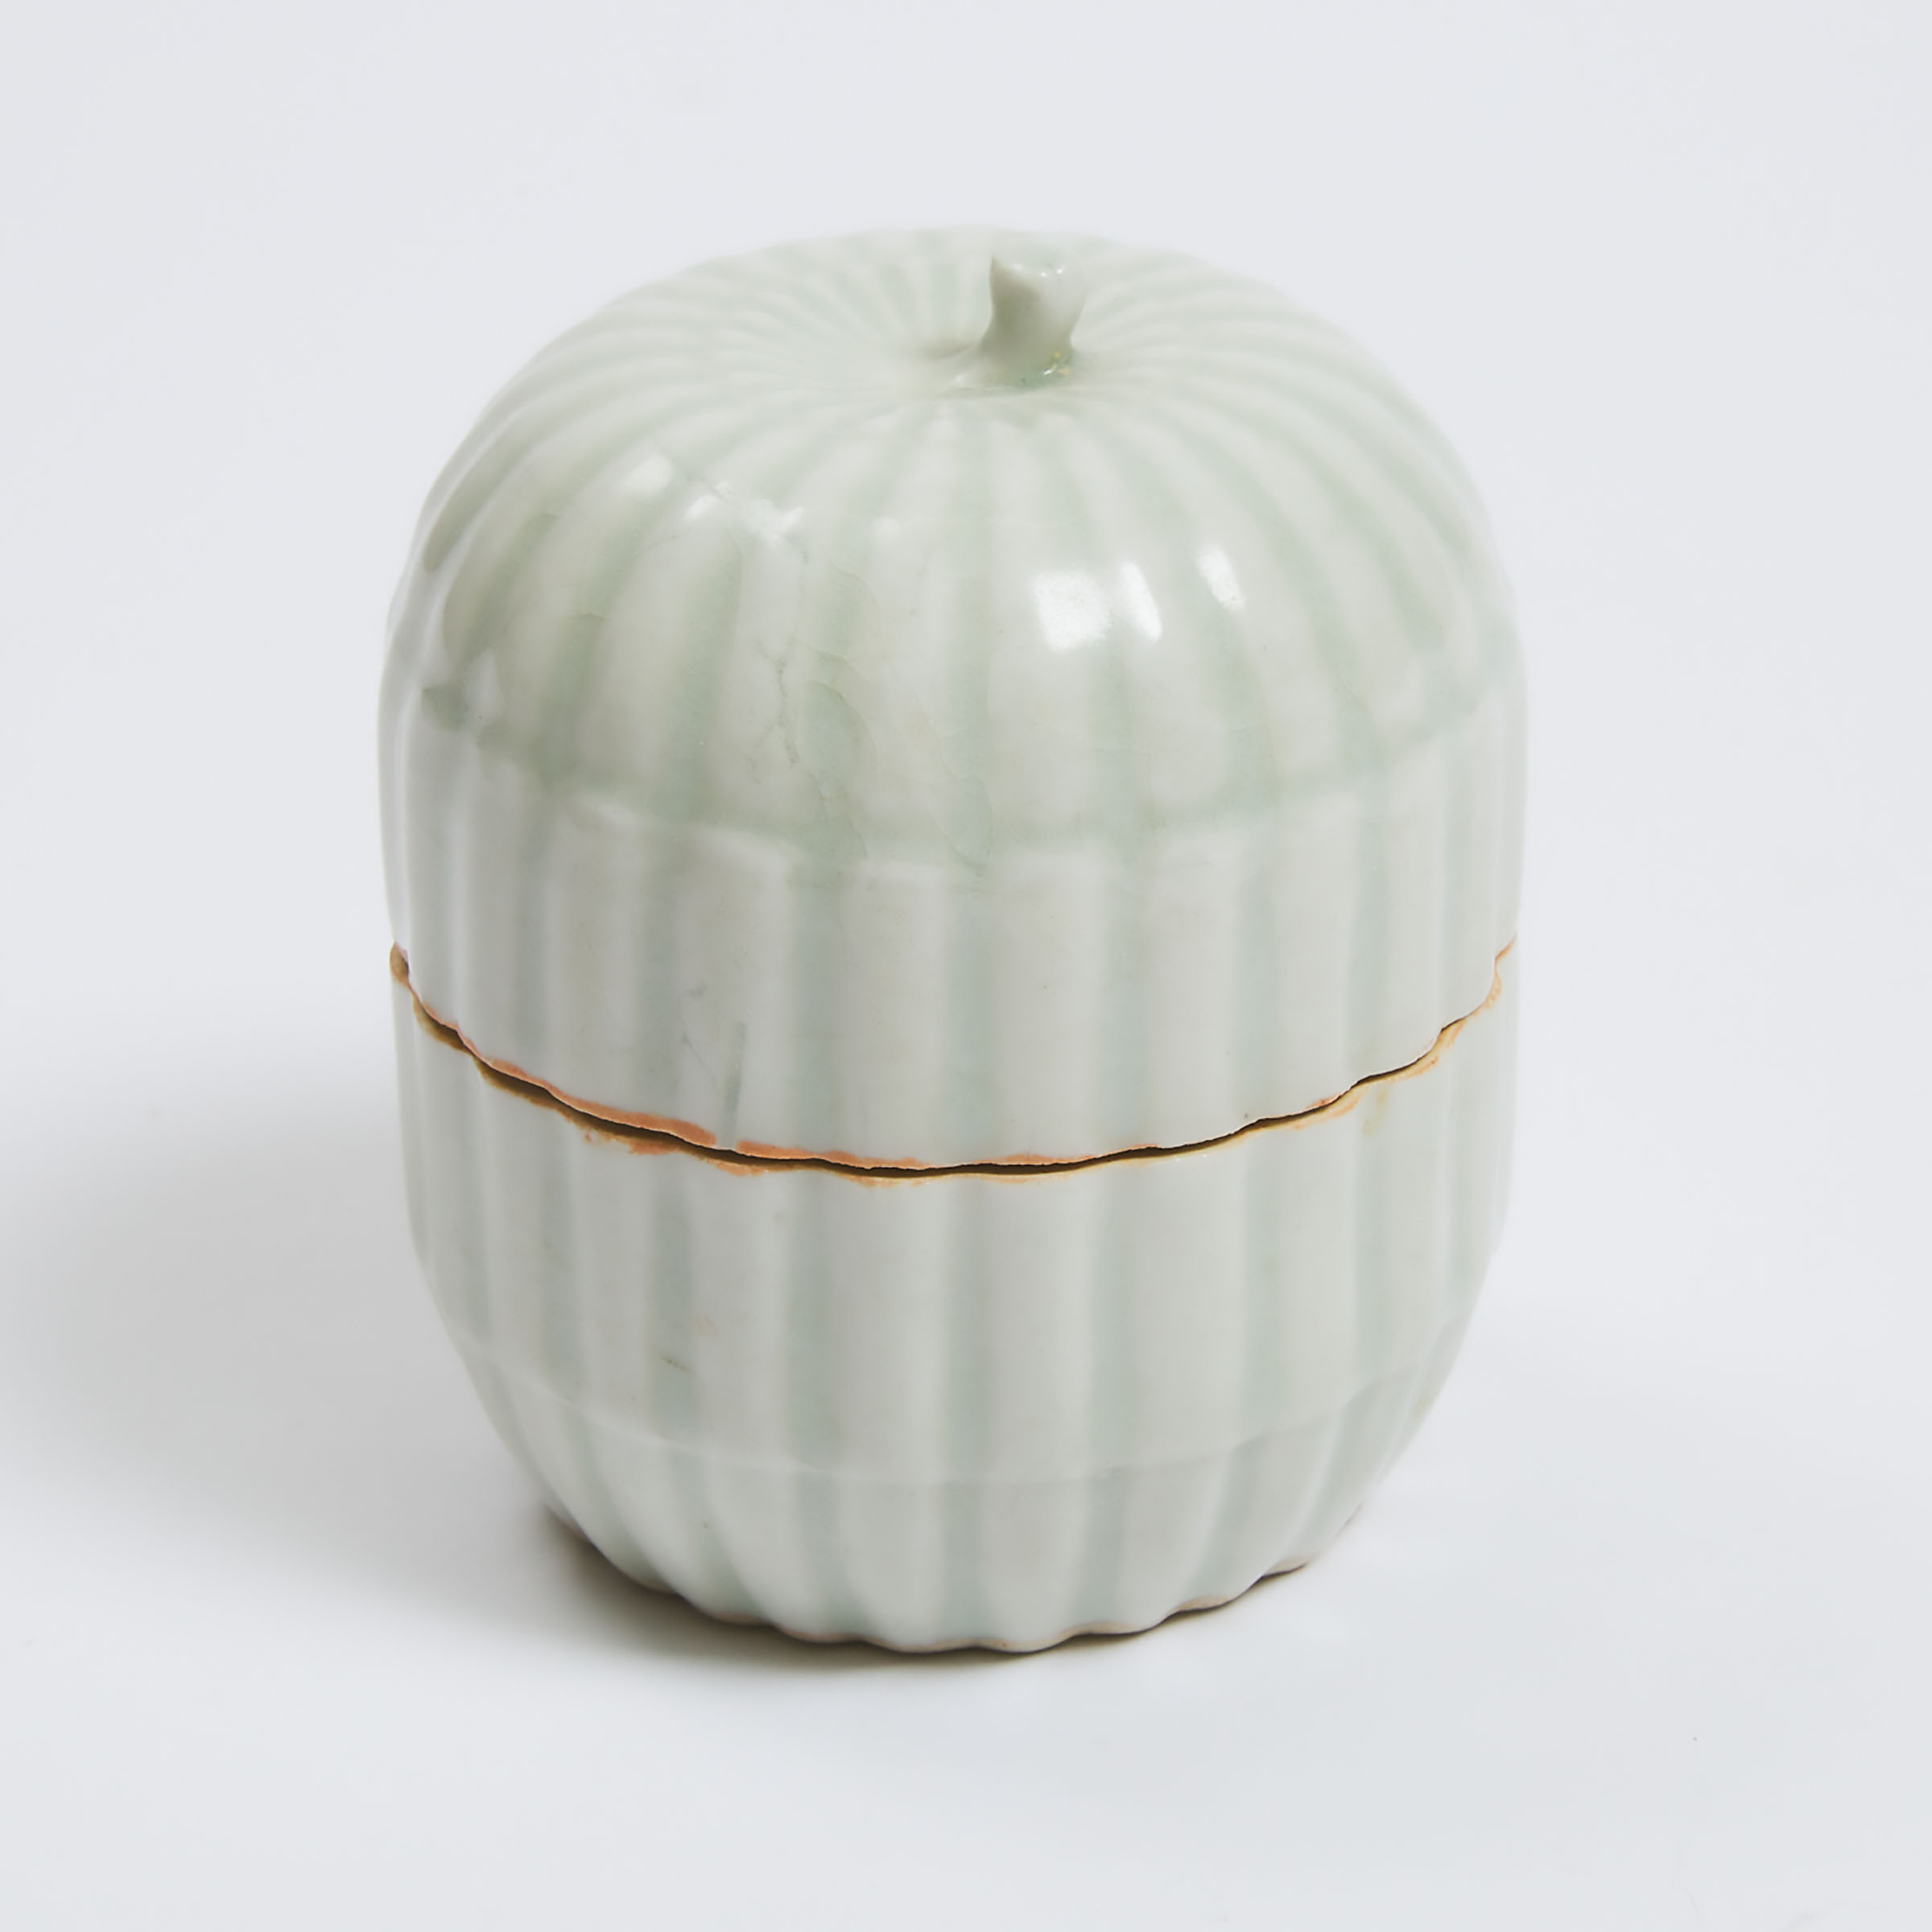 A Qingbai Melon Form Box and Cover 3ac21d